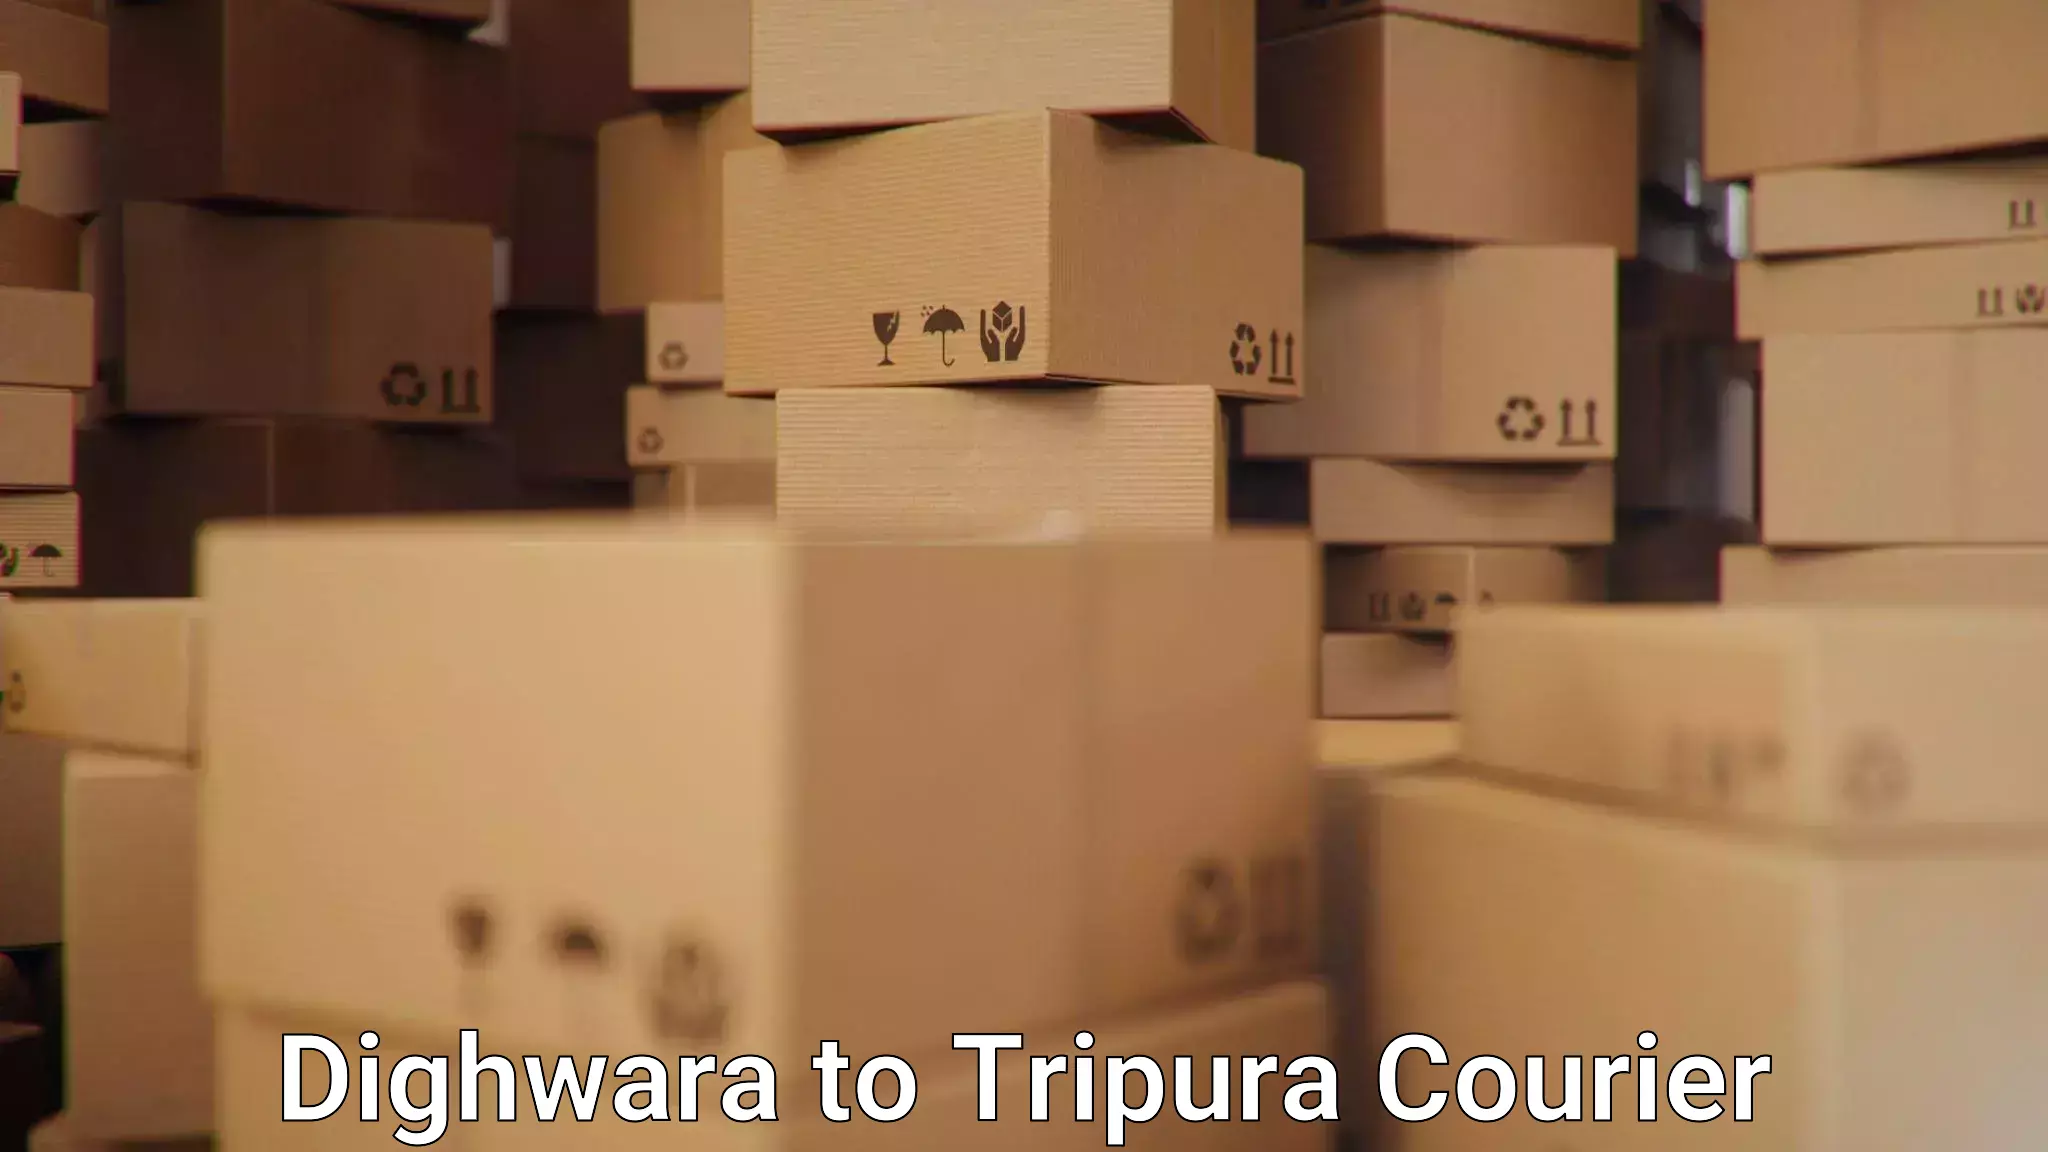 Courier service comparison Dighwara to Kamalpur